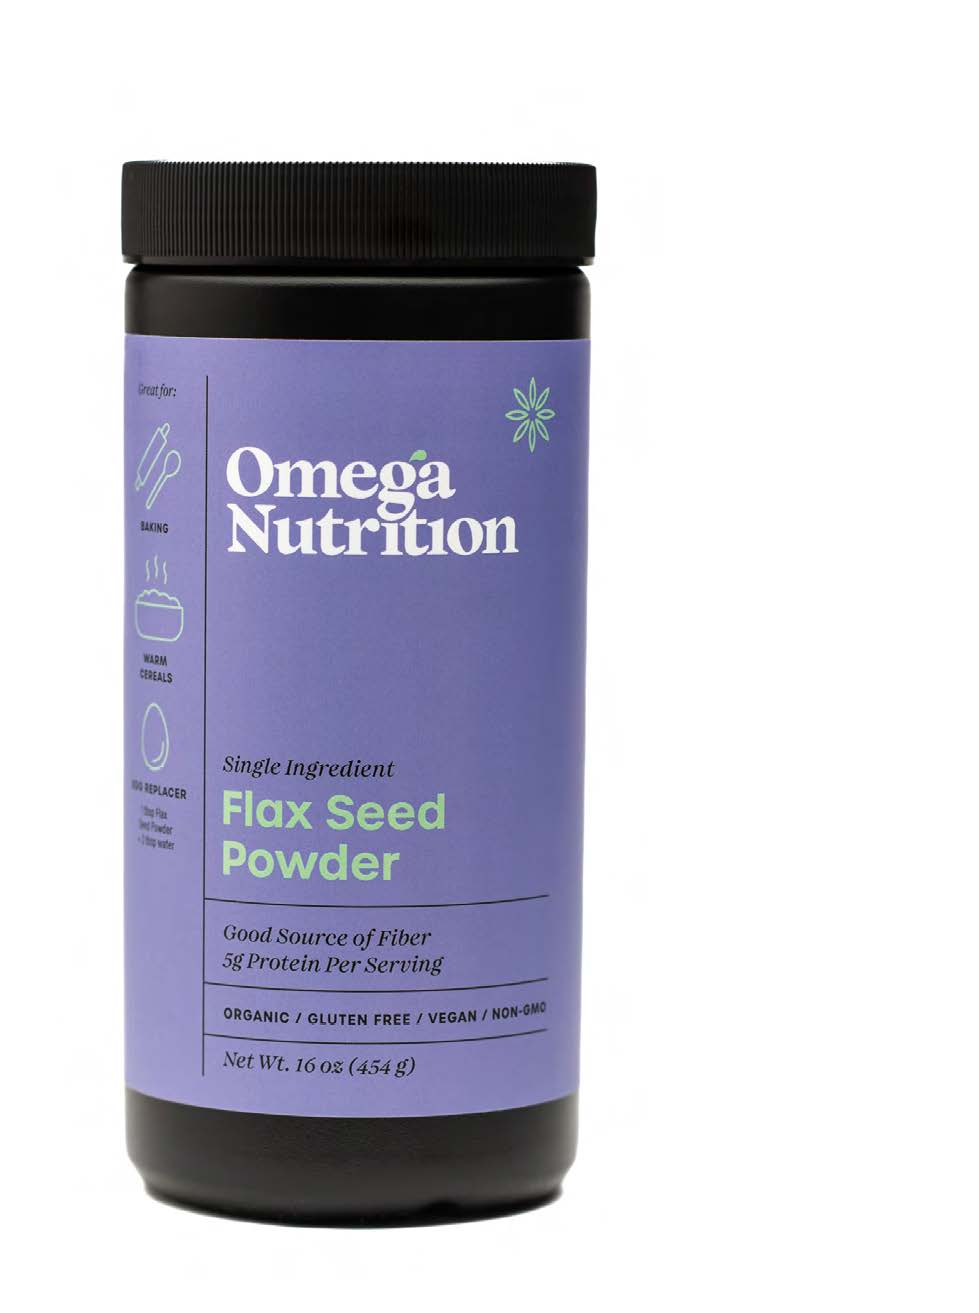 Omega Nutrient (previous Nutriflax)